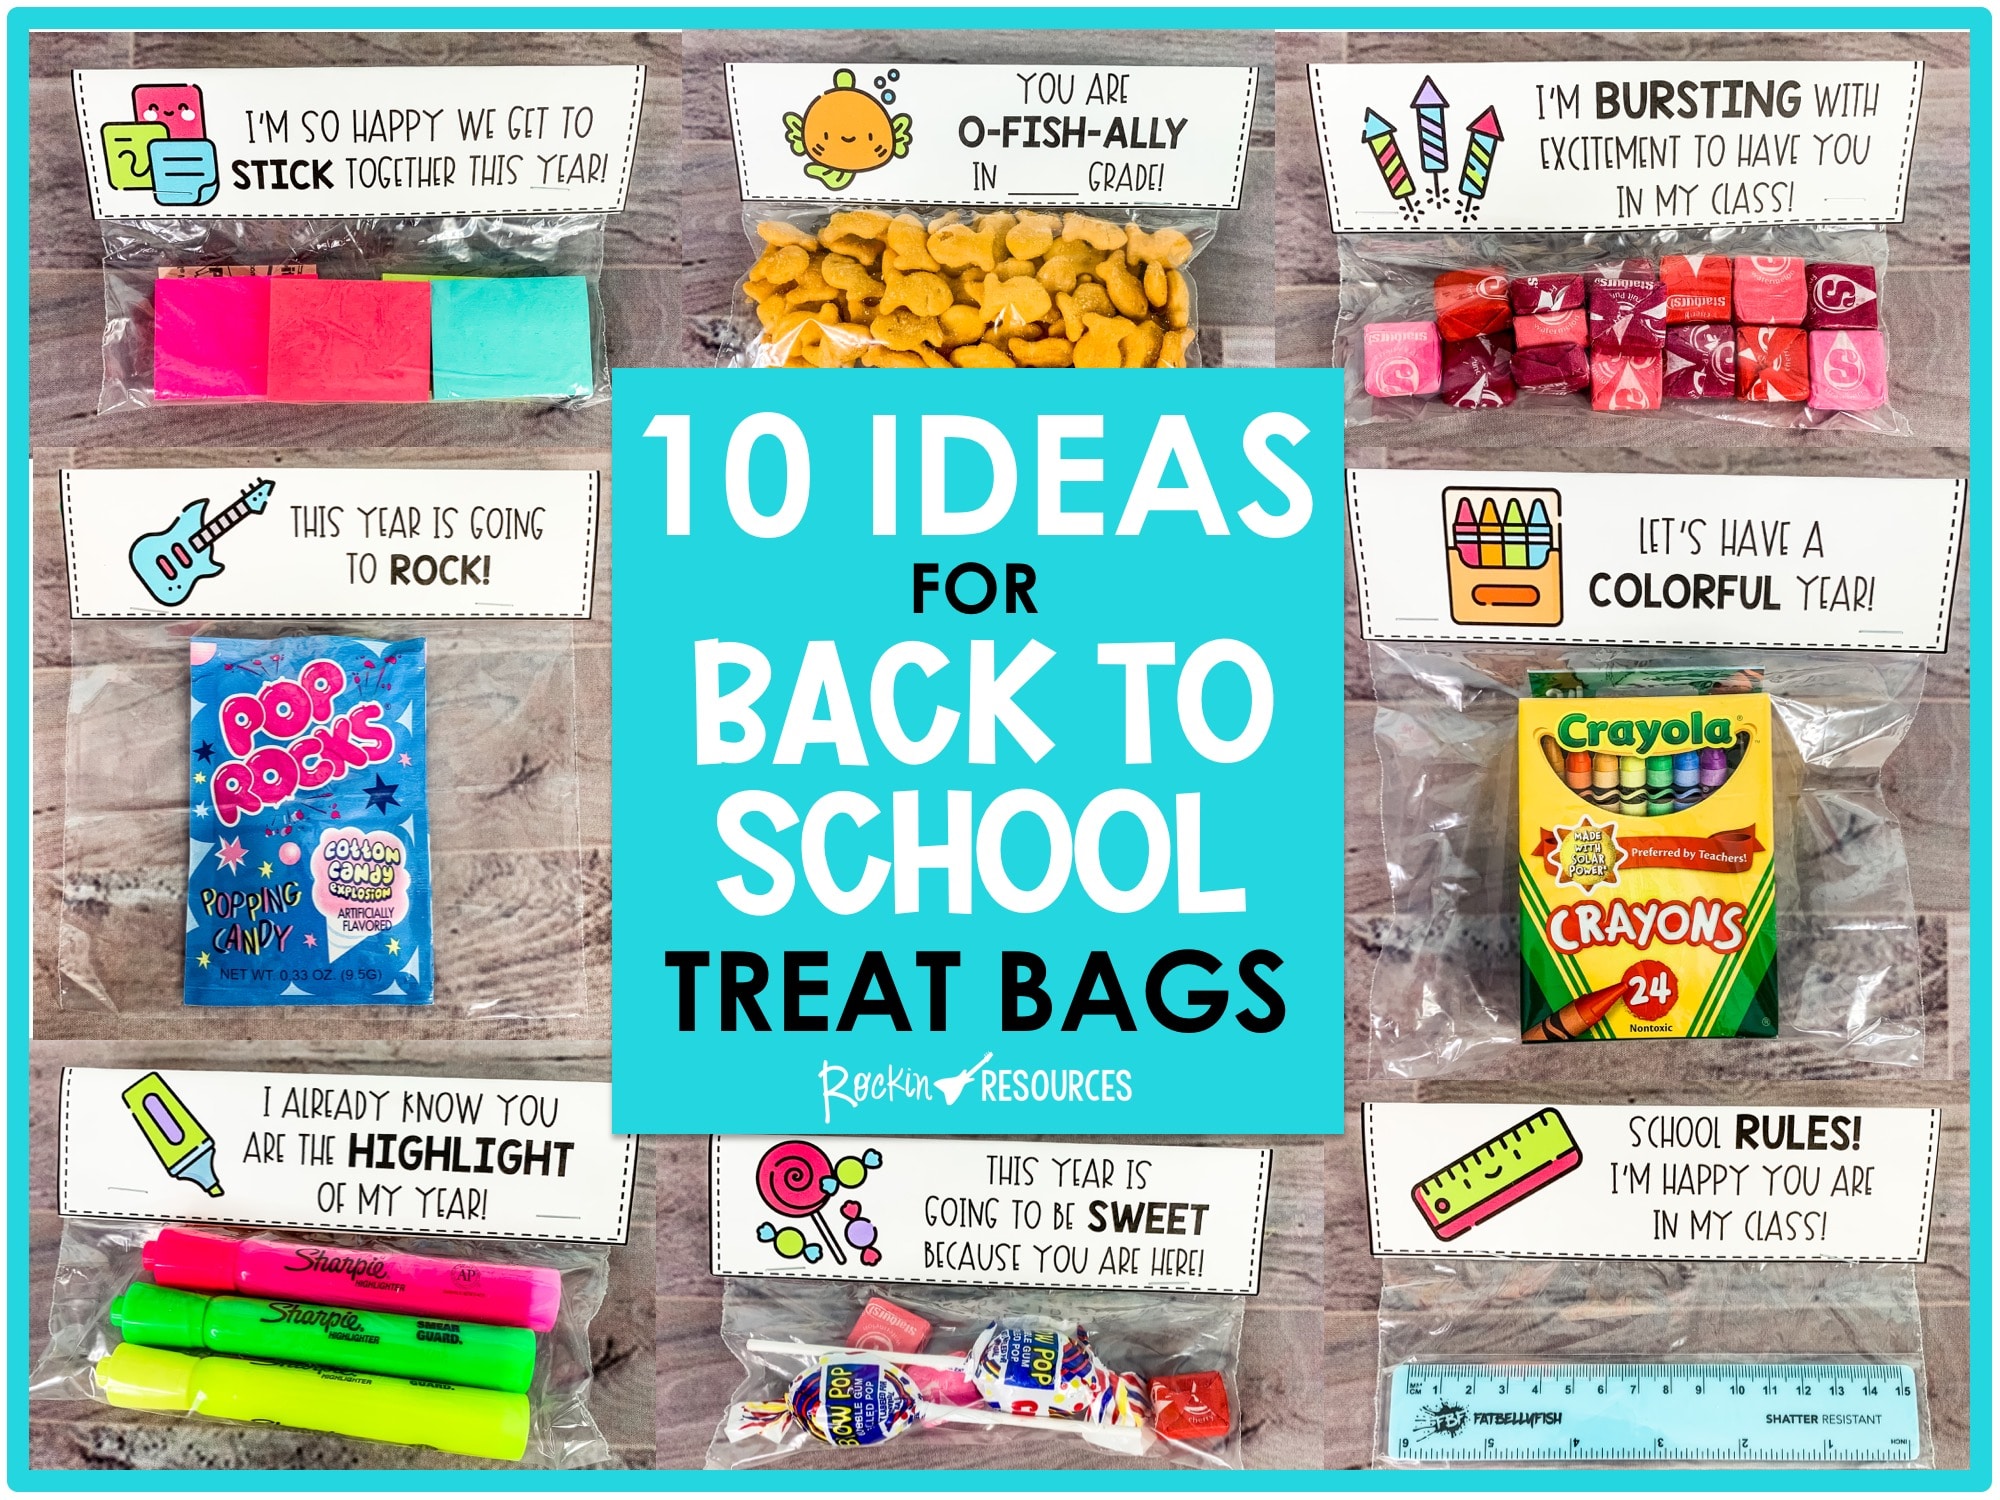 https://g8t7e2x9.rocketcdn.me/wp-content/uploads/back-to-school-treat-bags.jpg